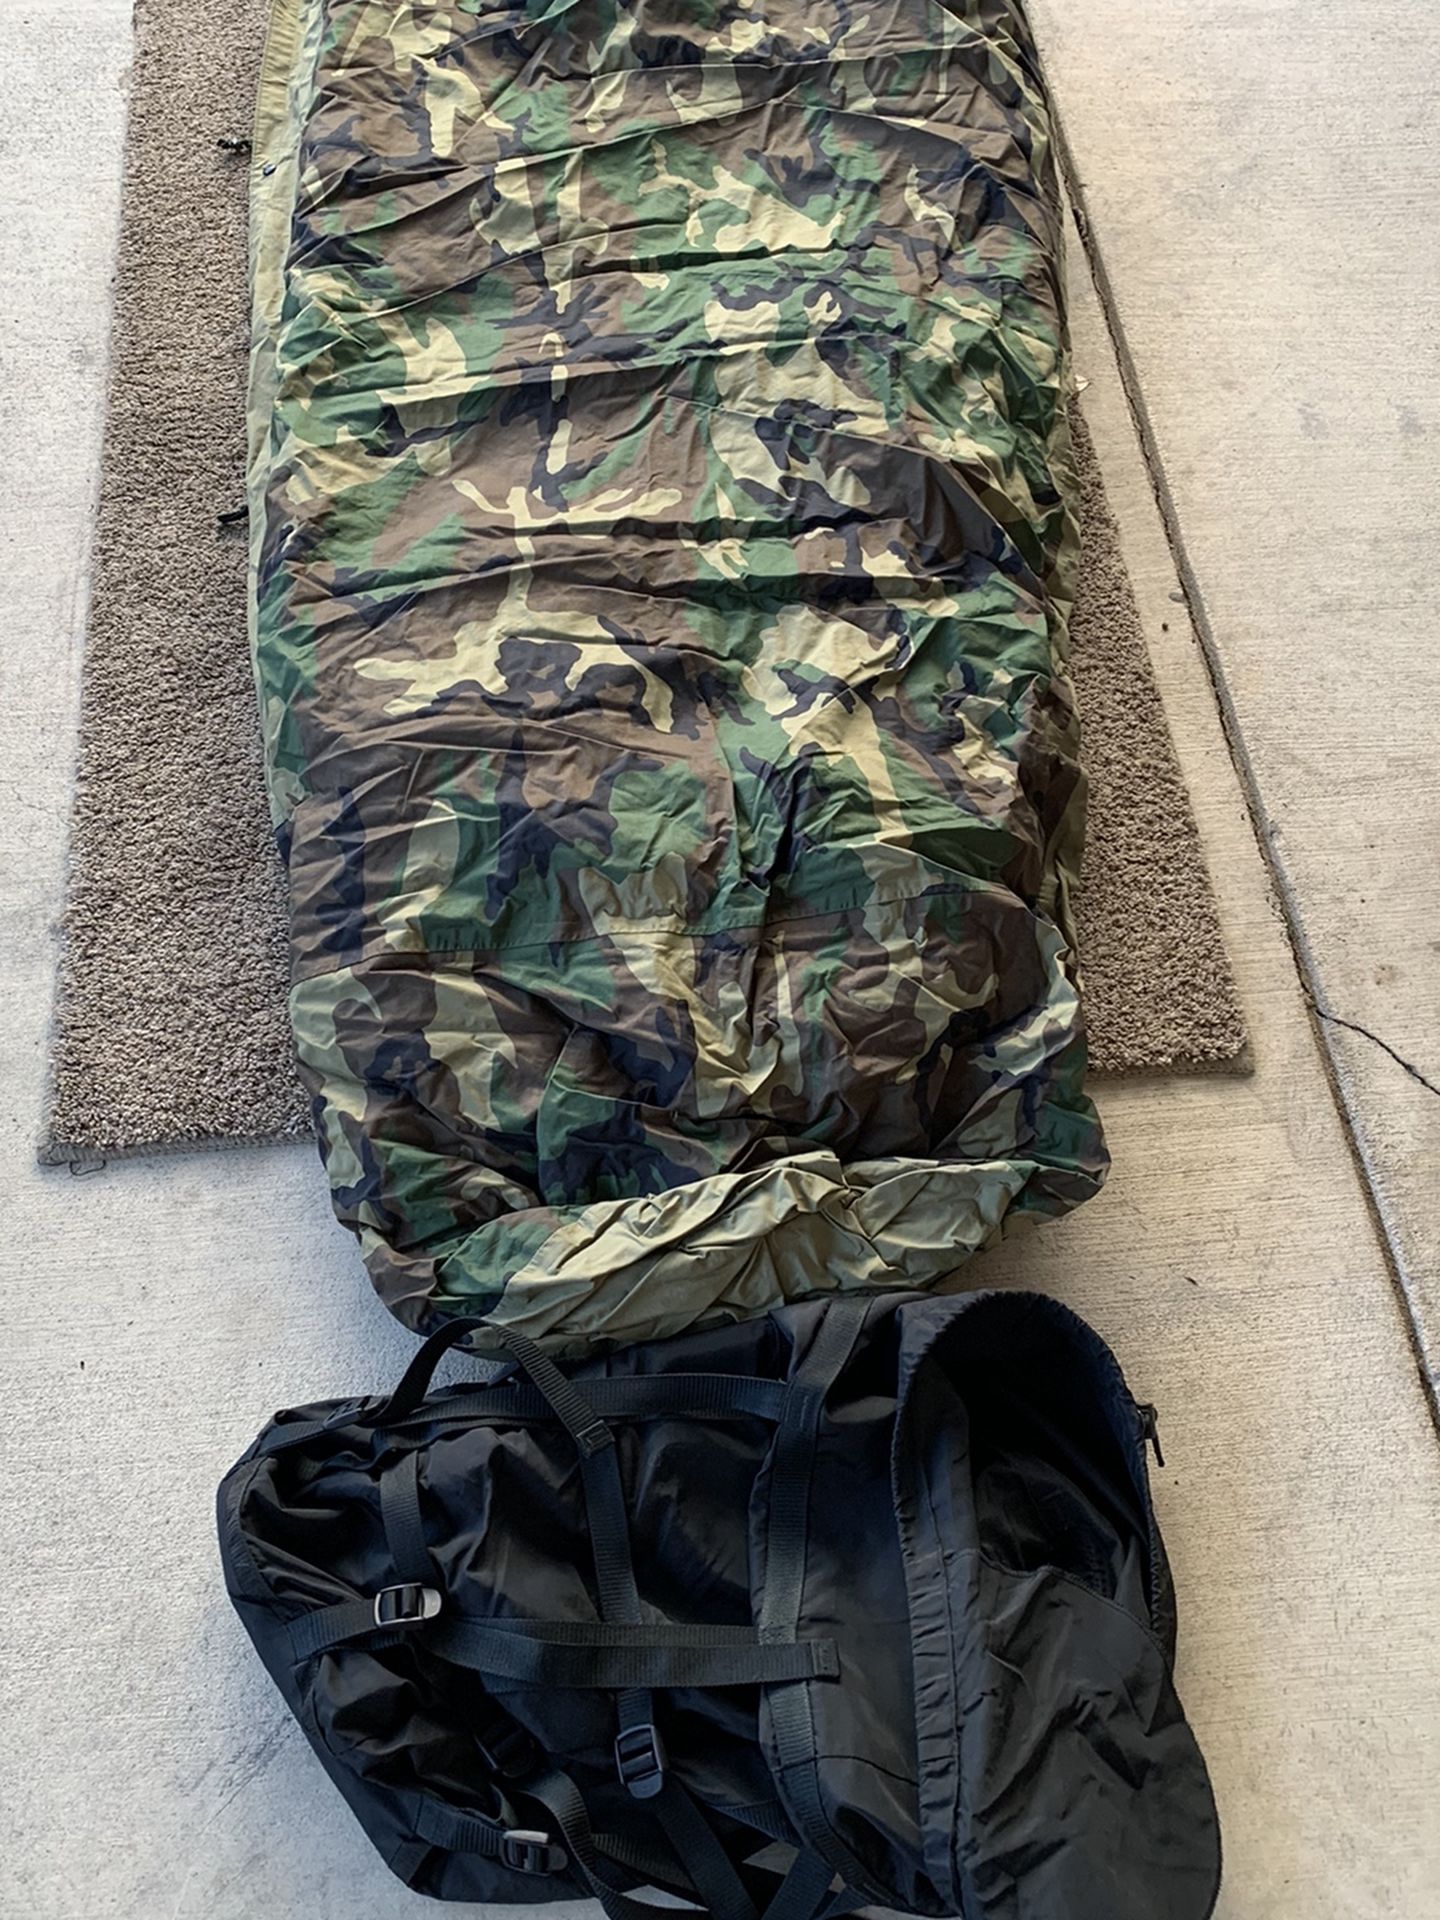 4 Piece Modular Sleep System MSS USGI Army Military Sleeping Bag Bivy